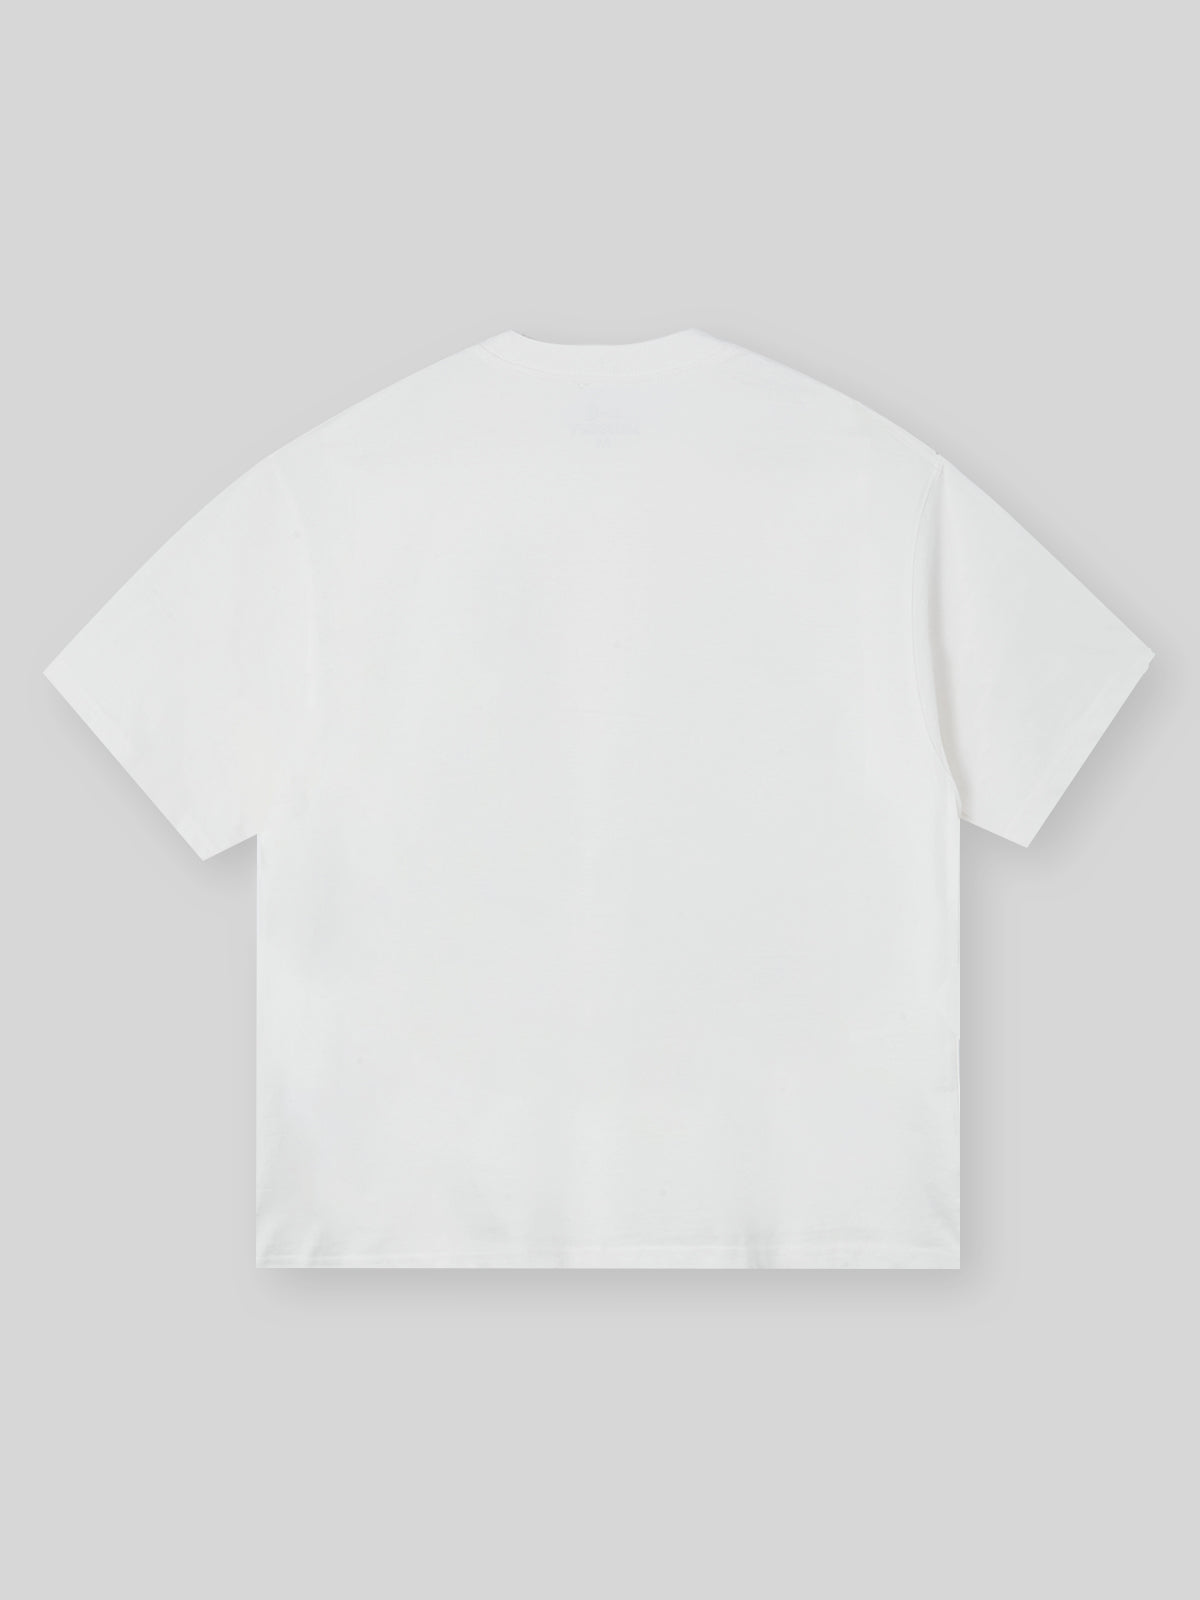 BOUNCE BACK© Crystal Cross Lip Print T-shirt